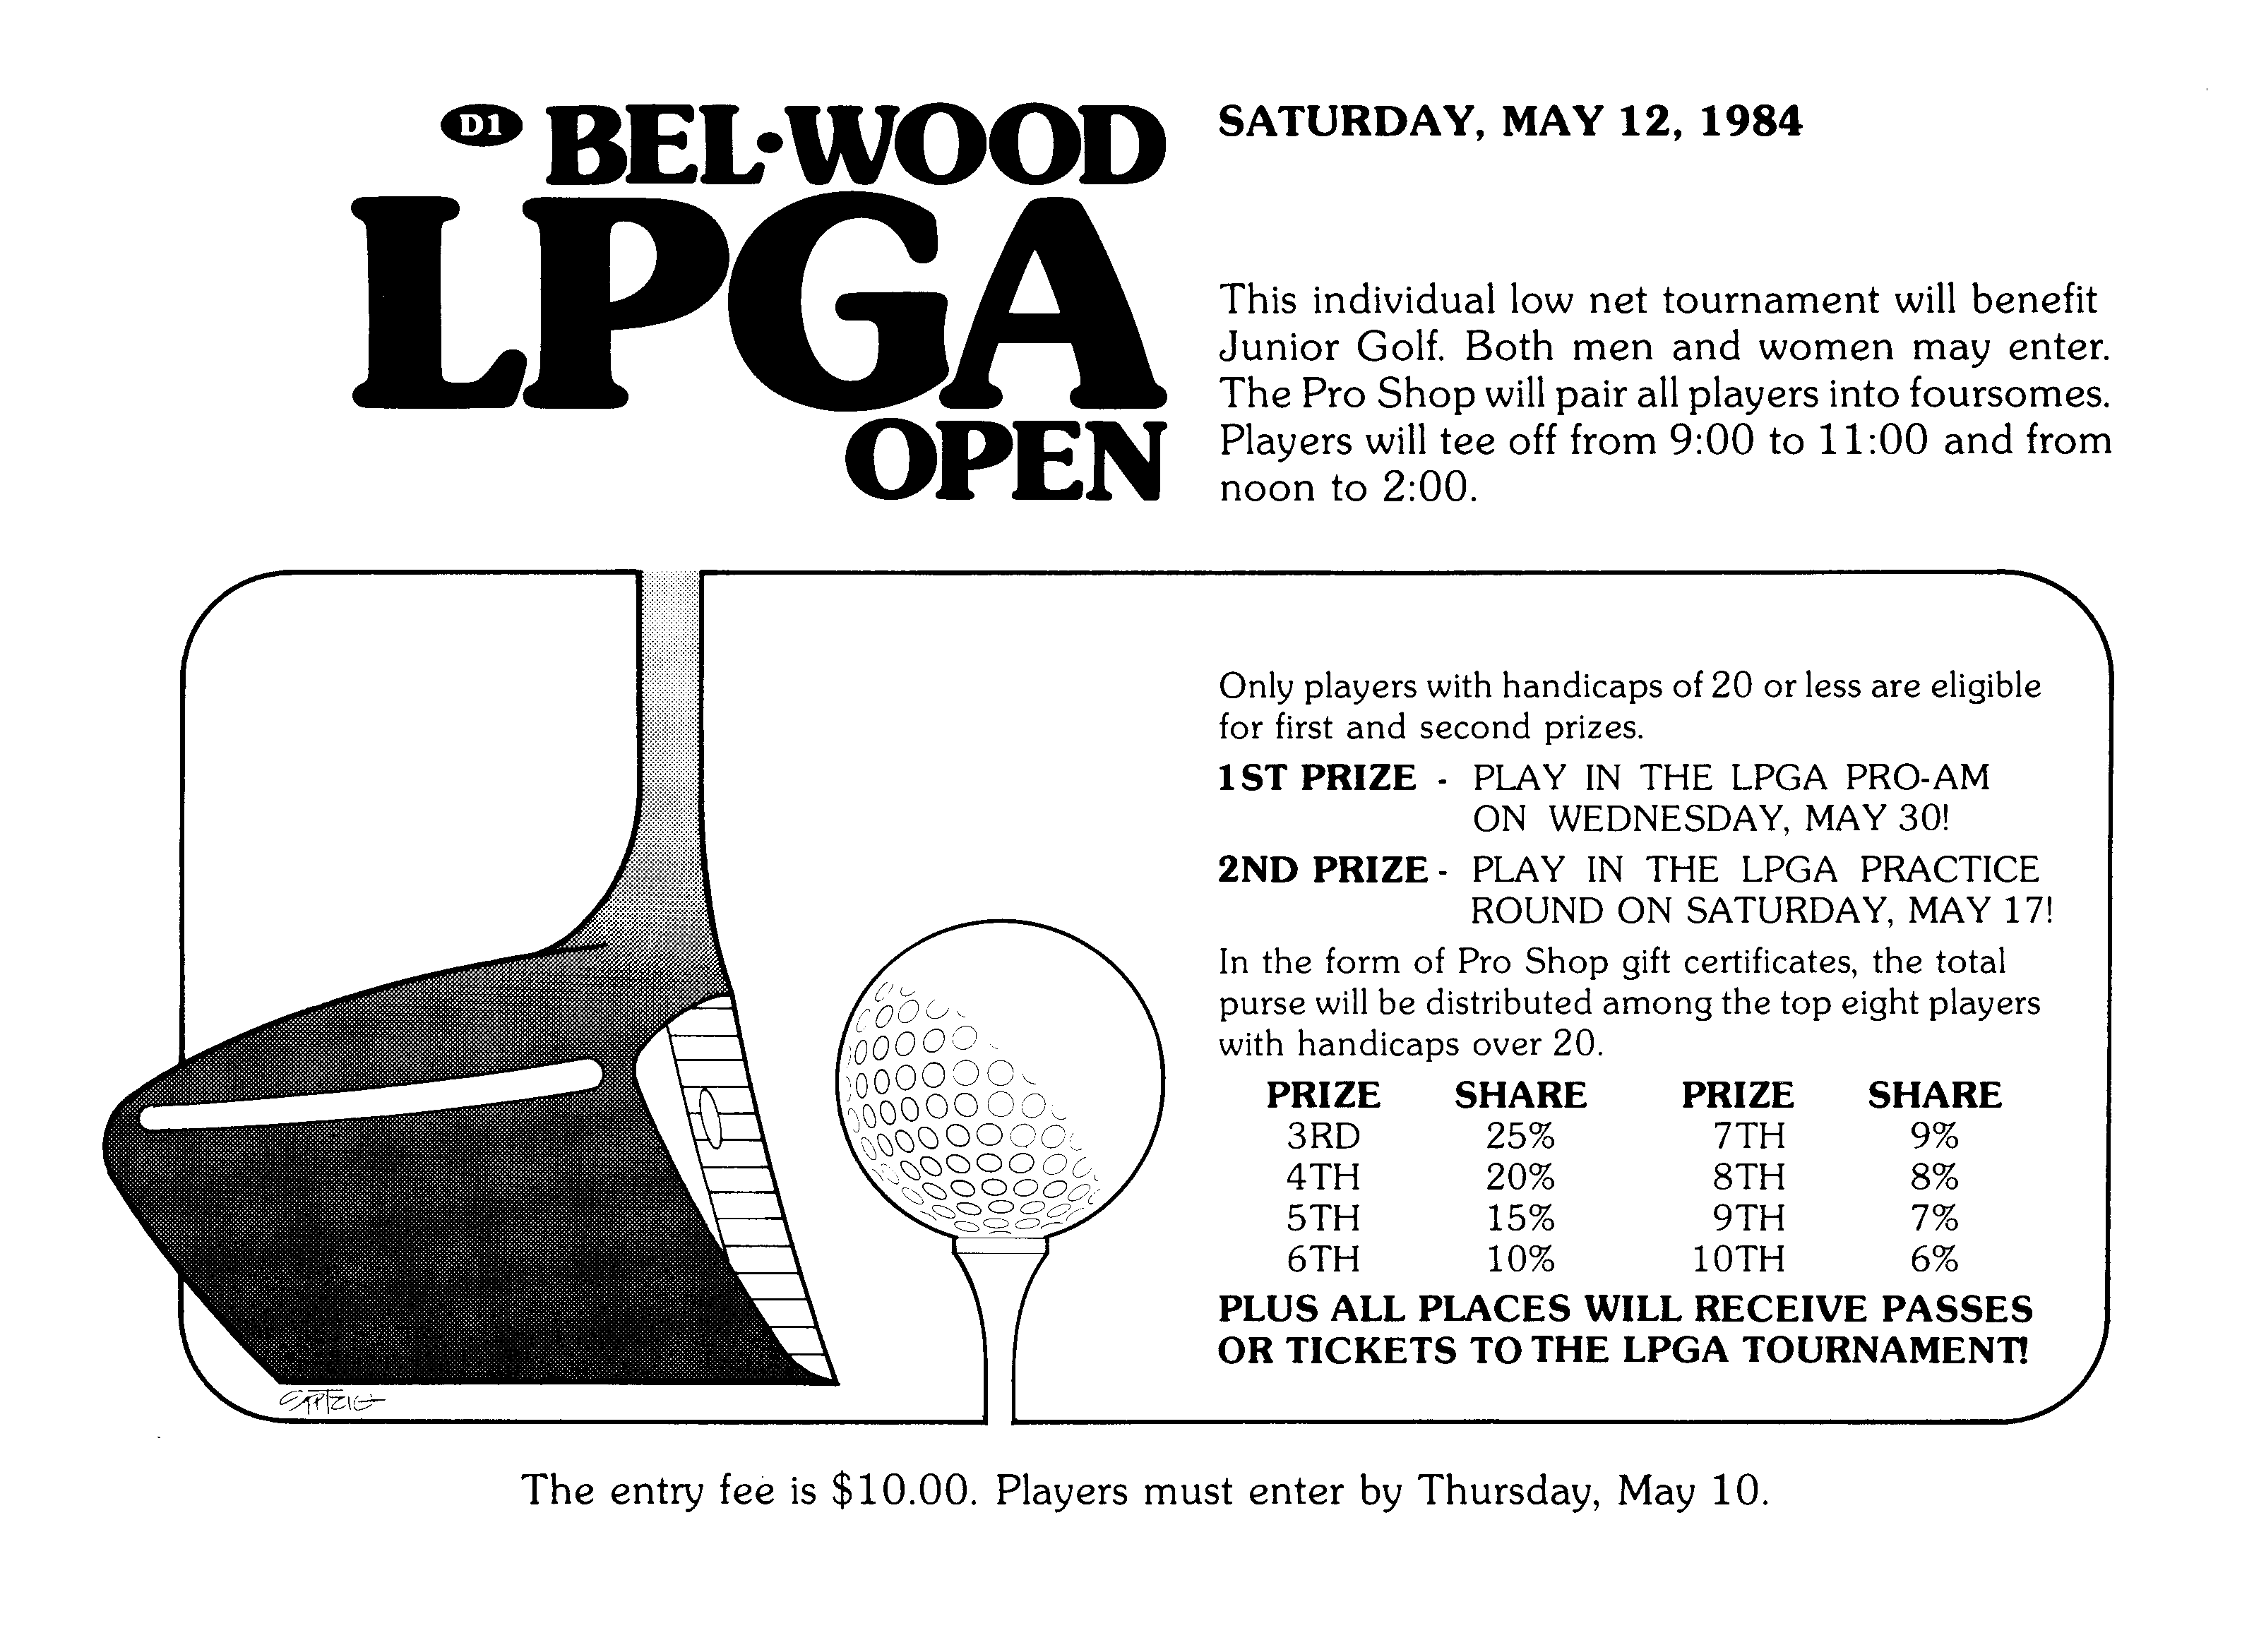 A flier for an LPGA golf tournament at a country club.